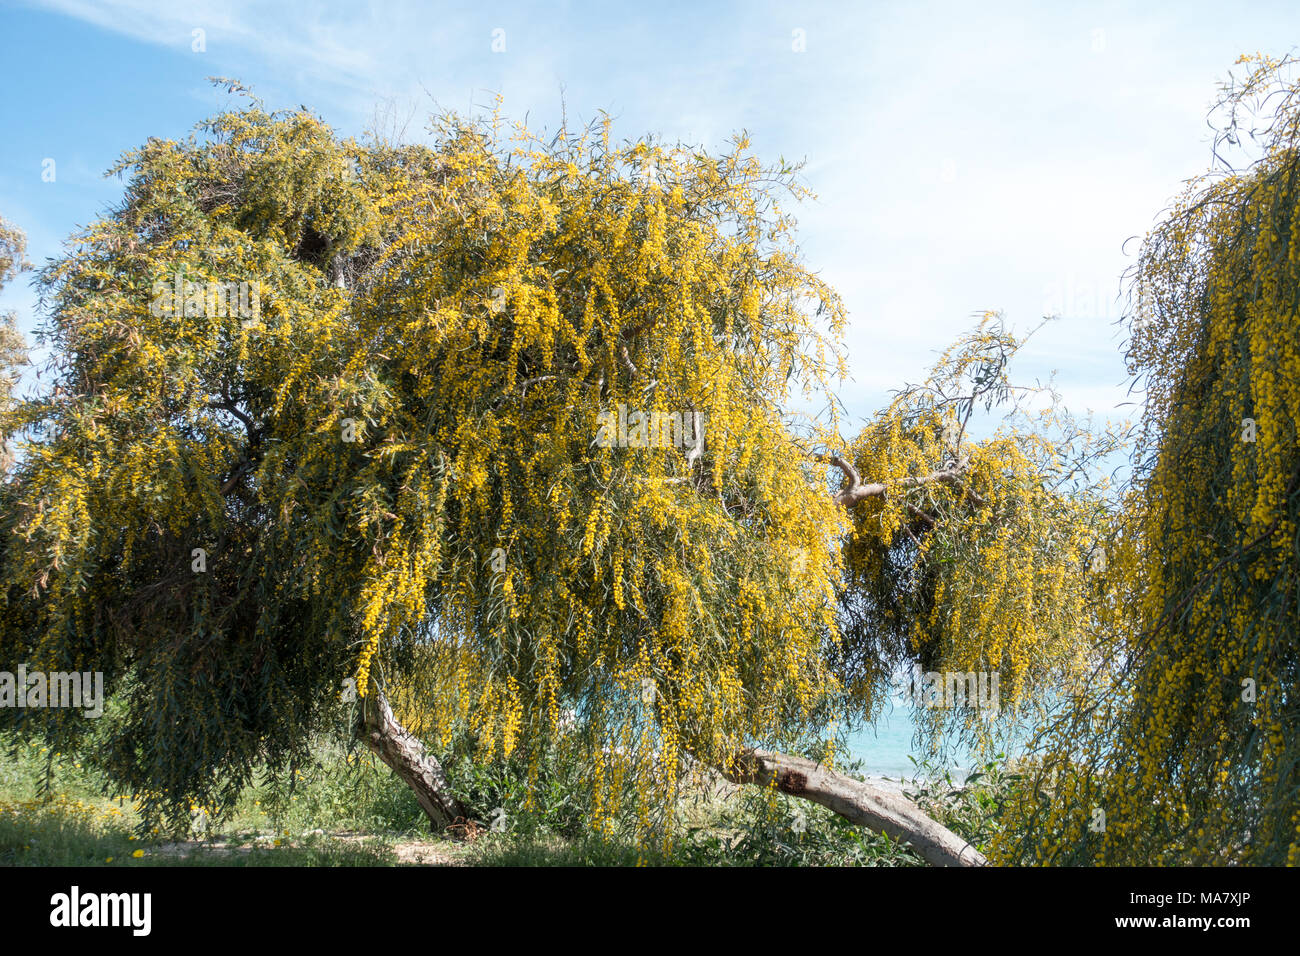 Yellow Mimosa trees in full bloom on the promenade, Pissouri beach, Cyprus Stock Photo